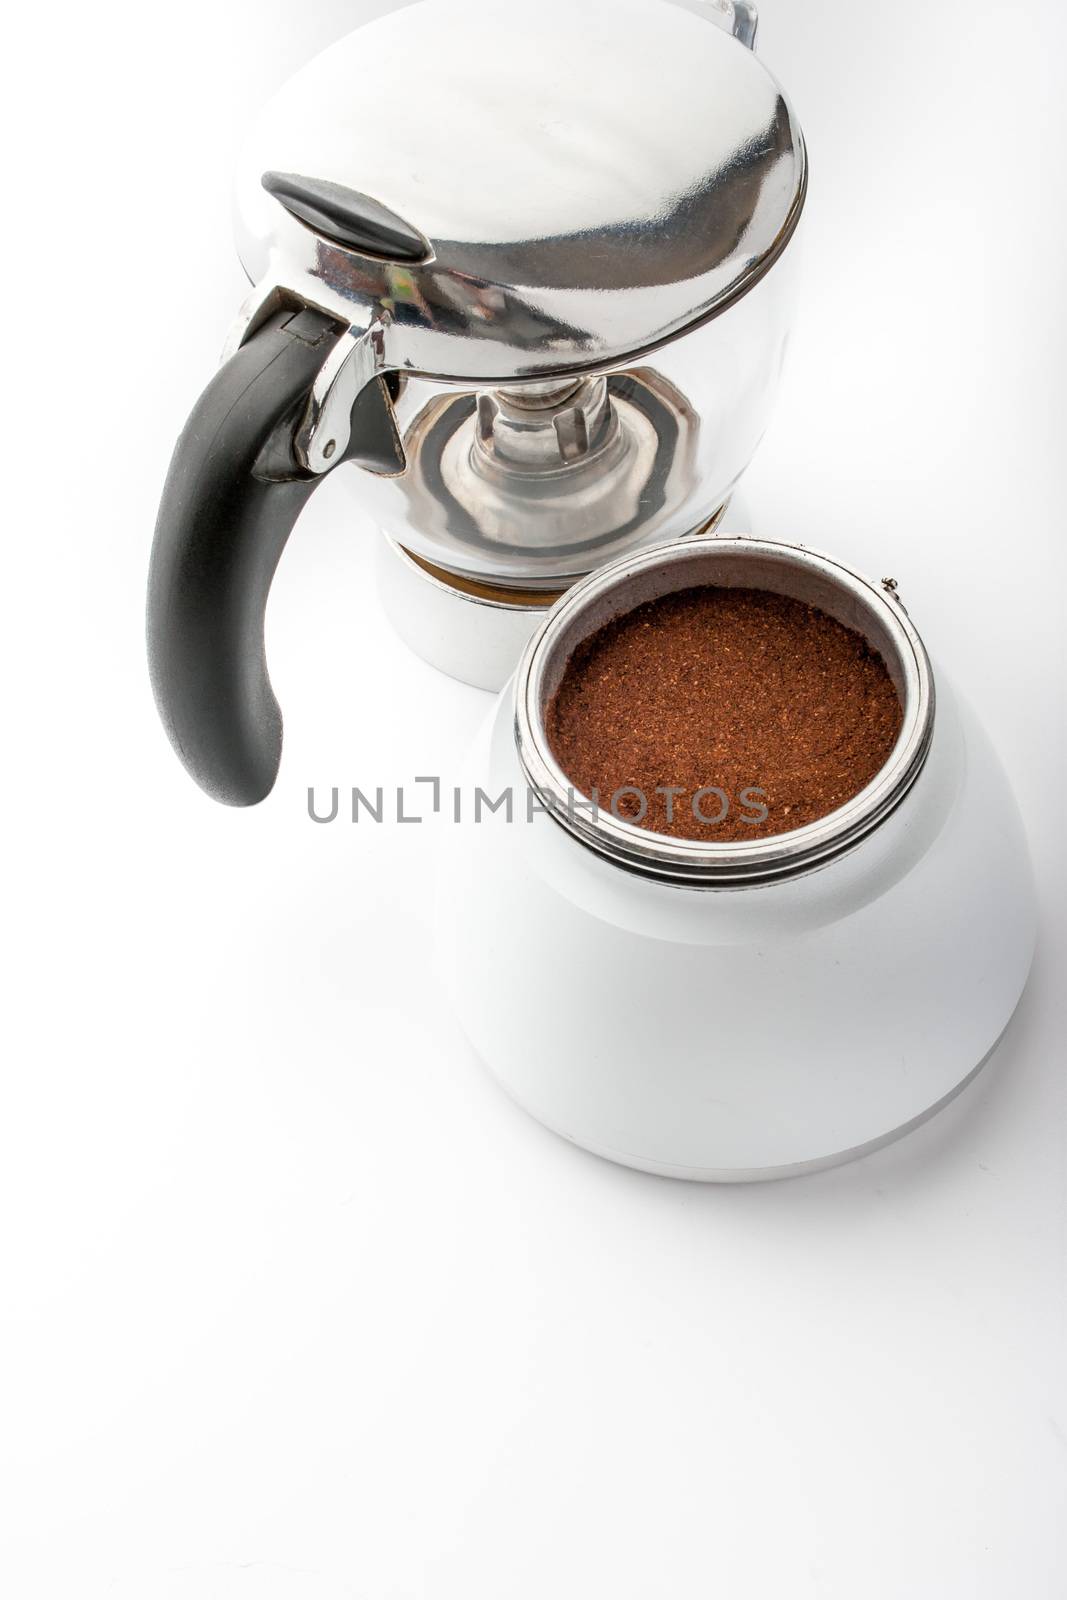 Open coffee maker with coffee by Deniskarpenkov